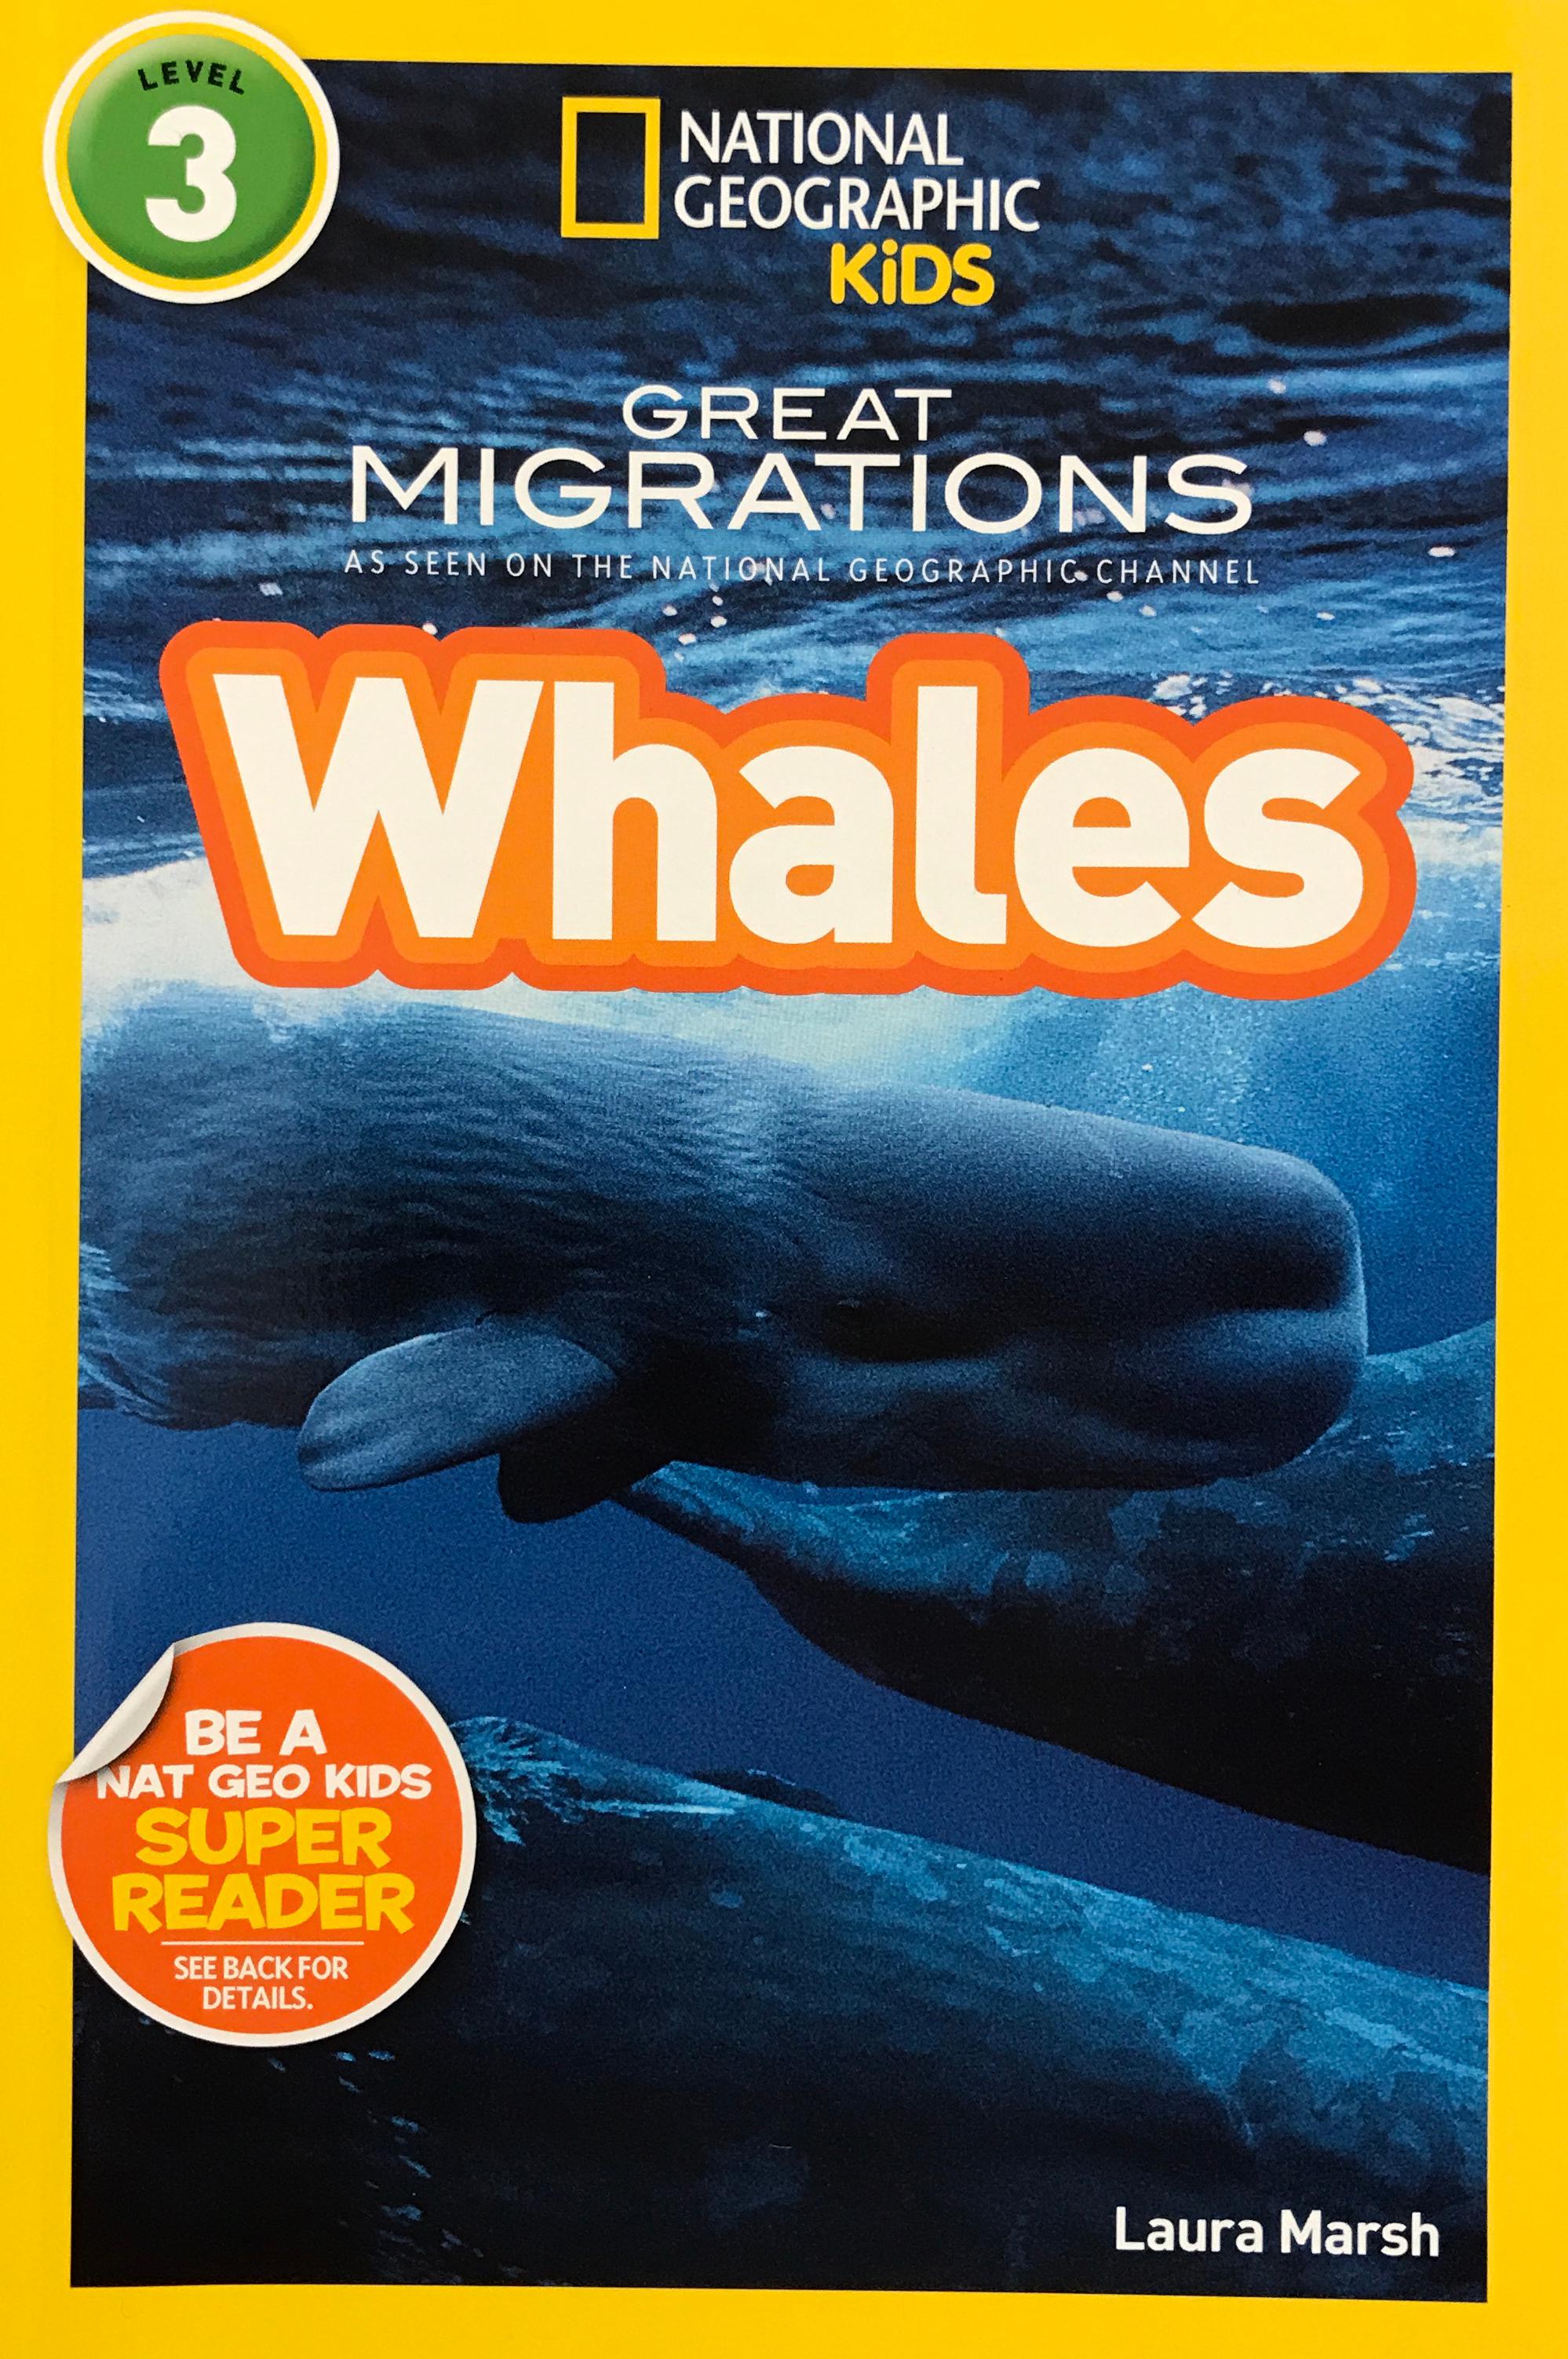  Book - Natl Geo Whales